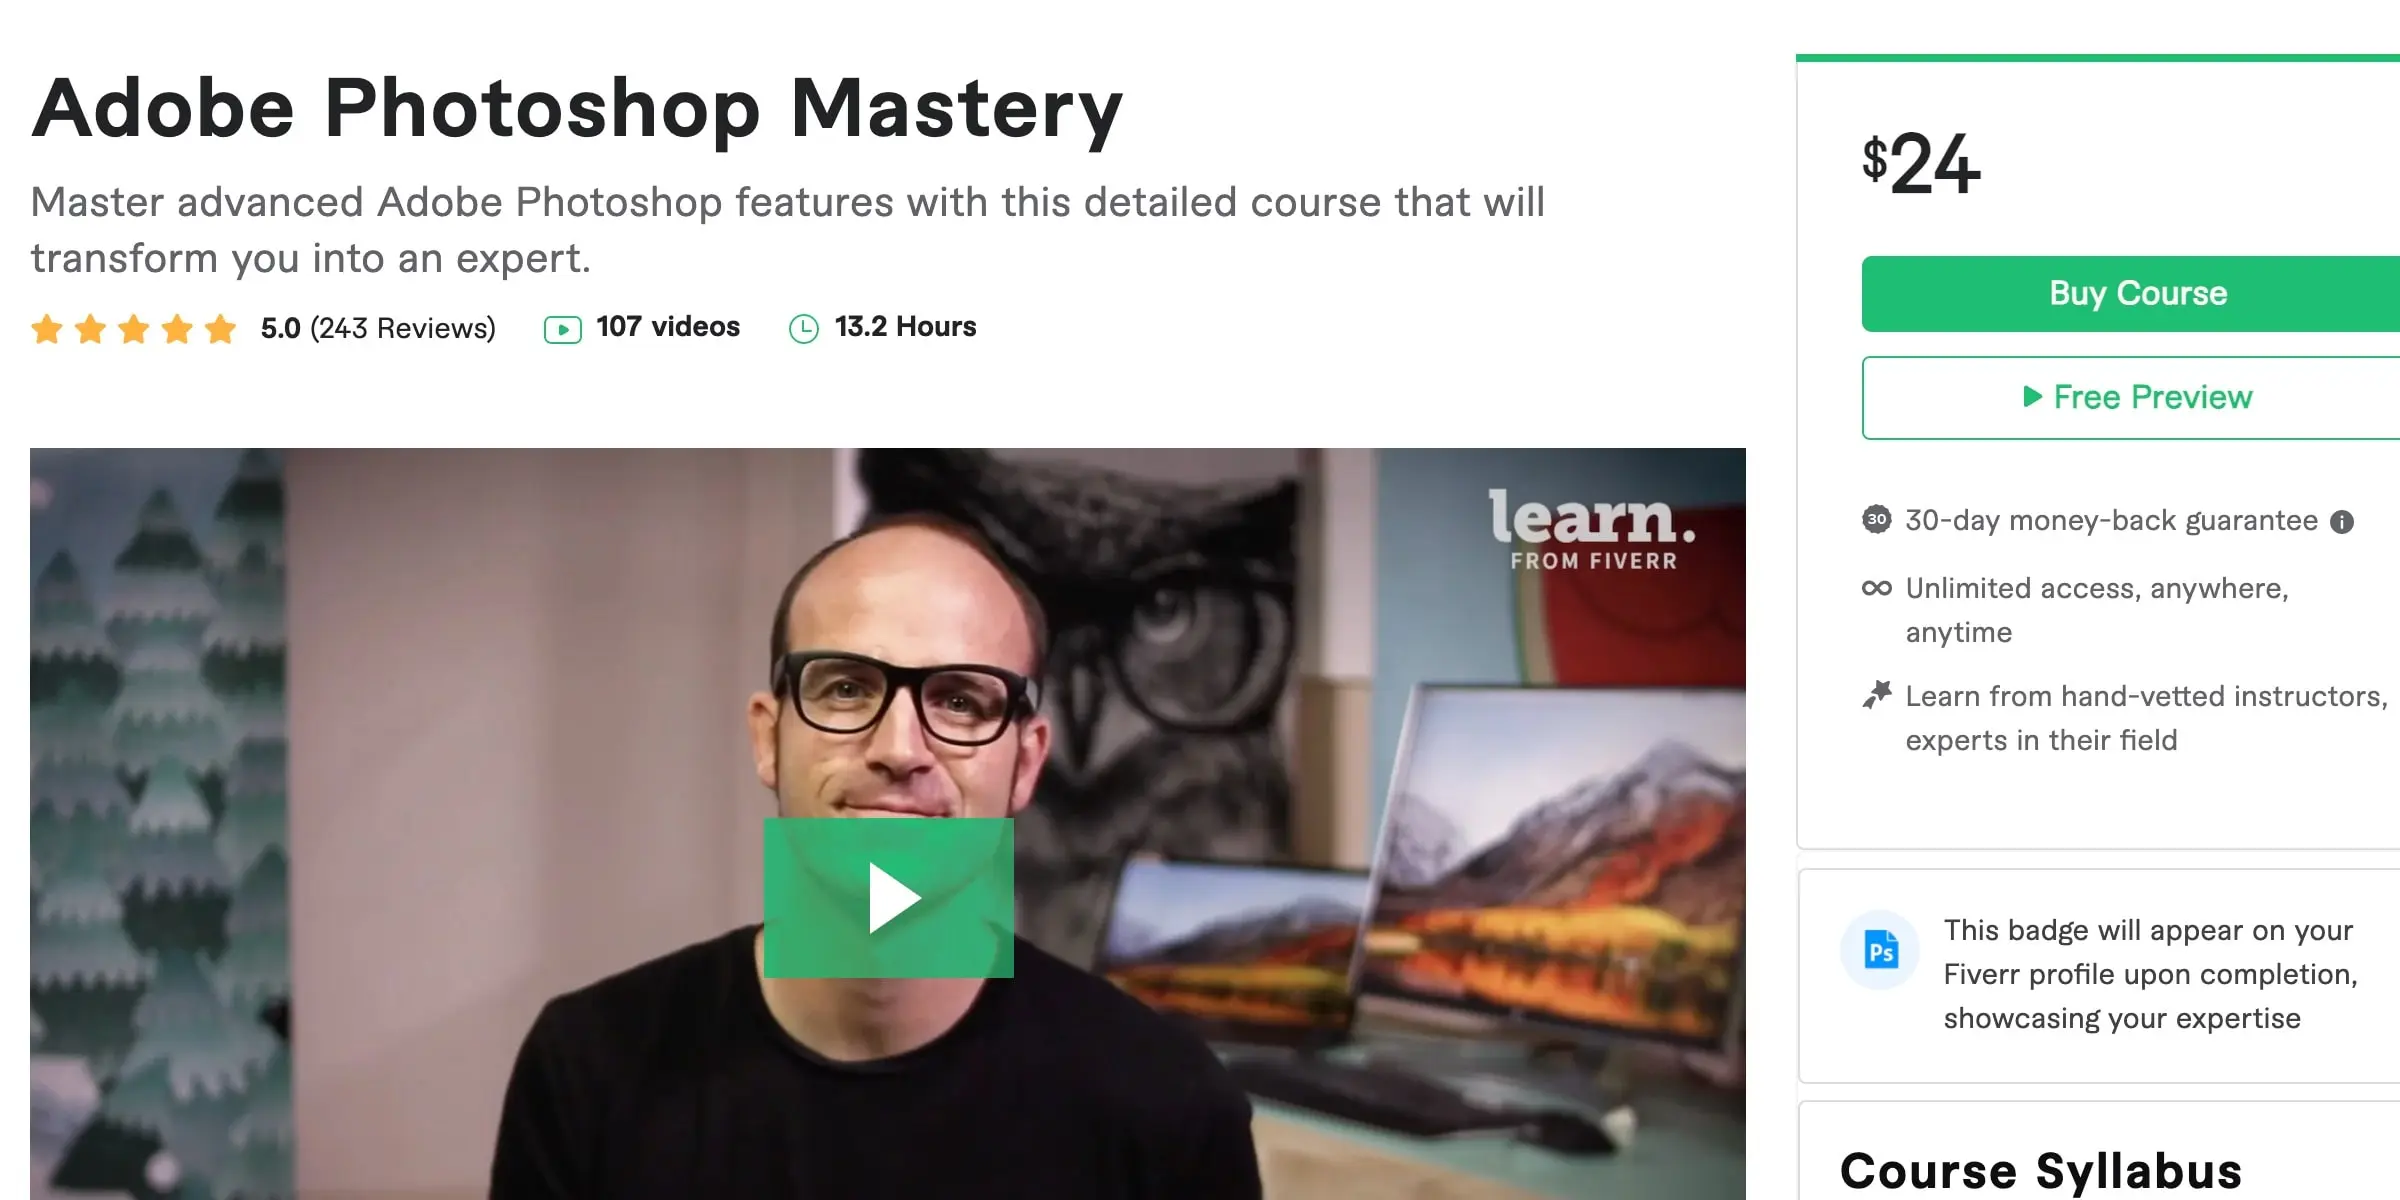 Adobe Photoshop Mastery Course